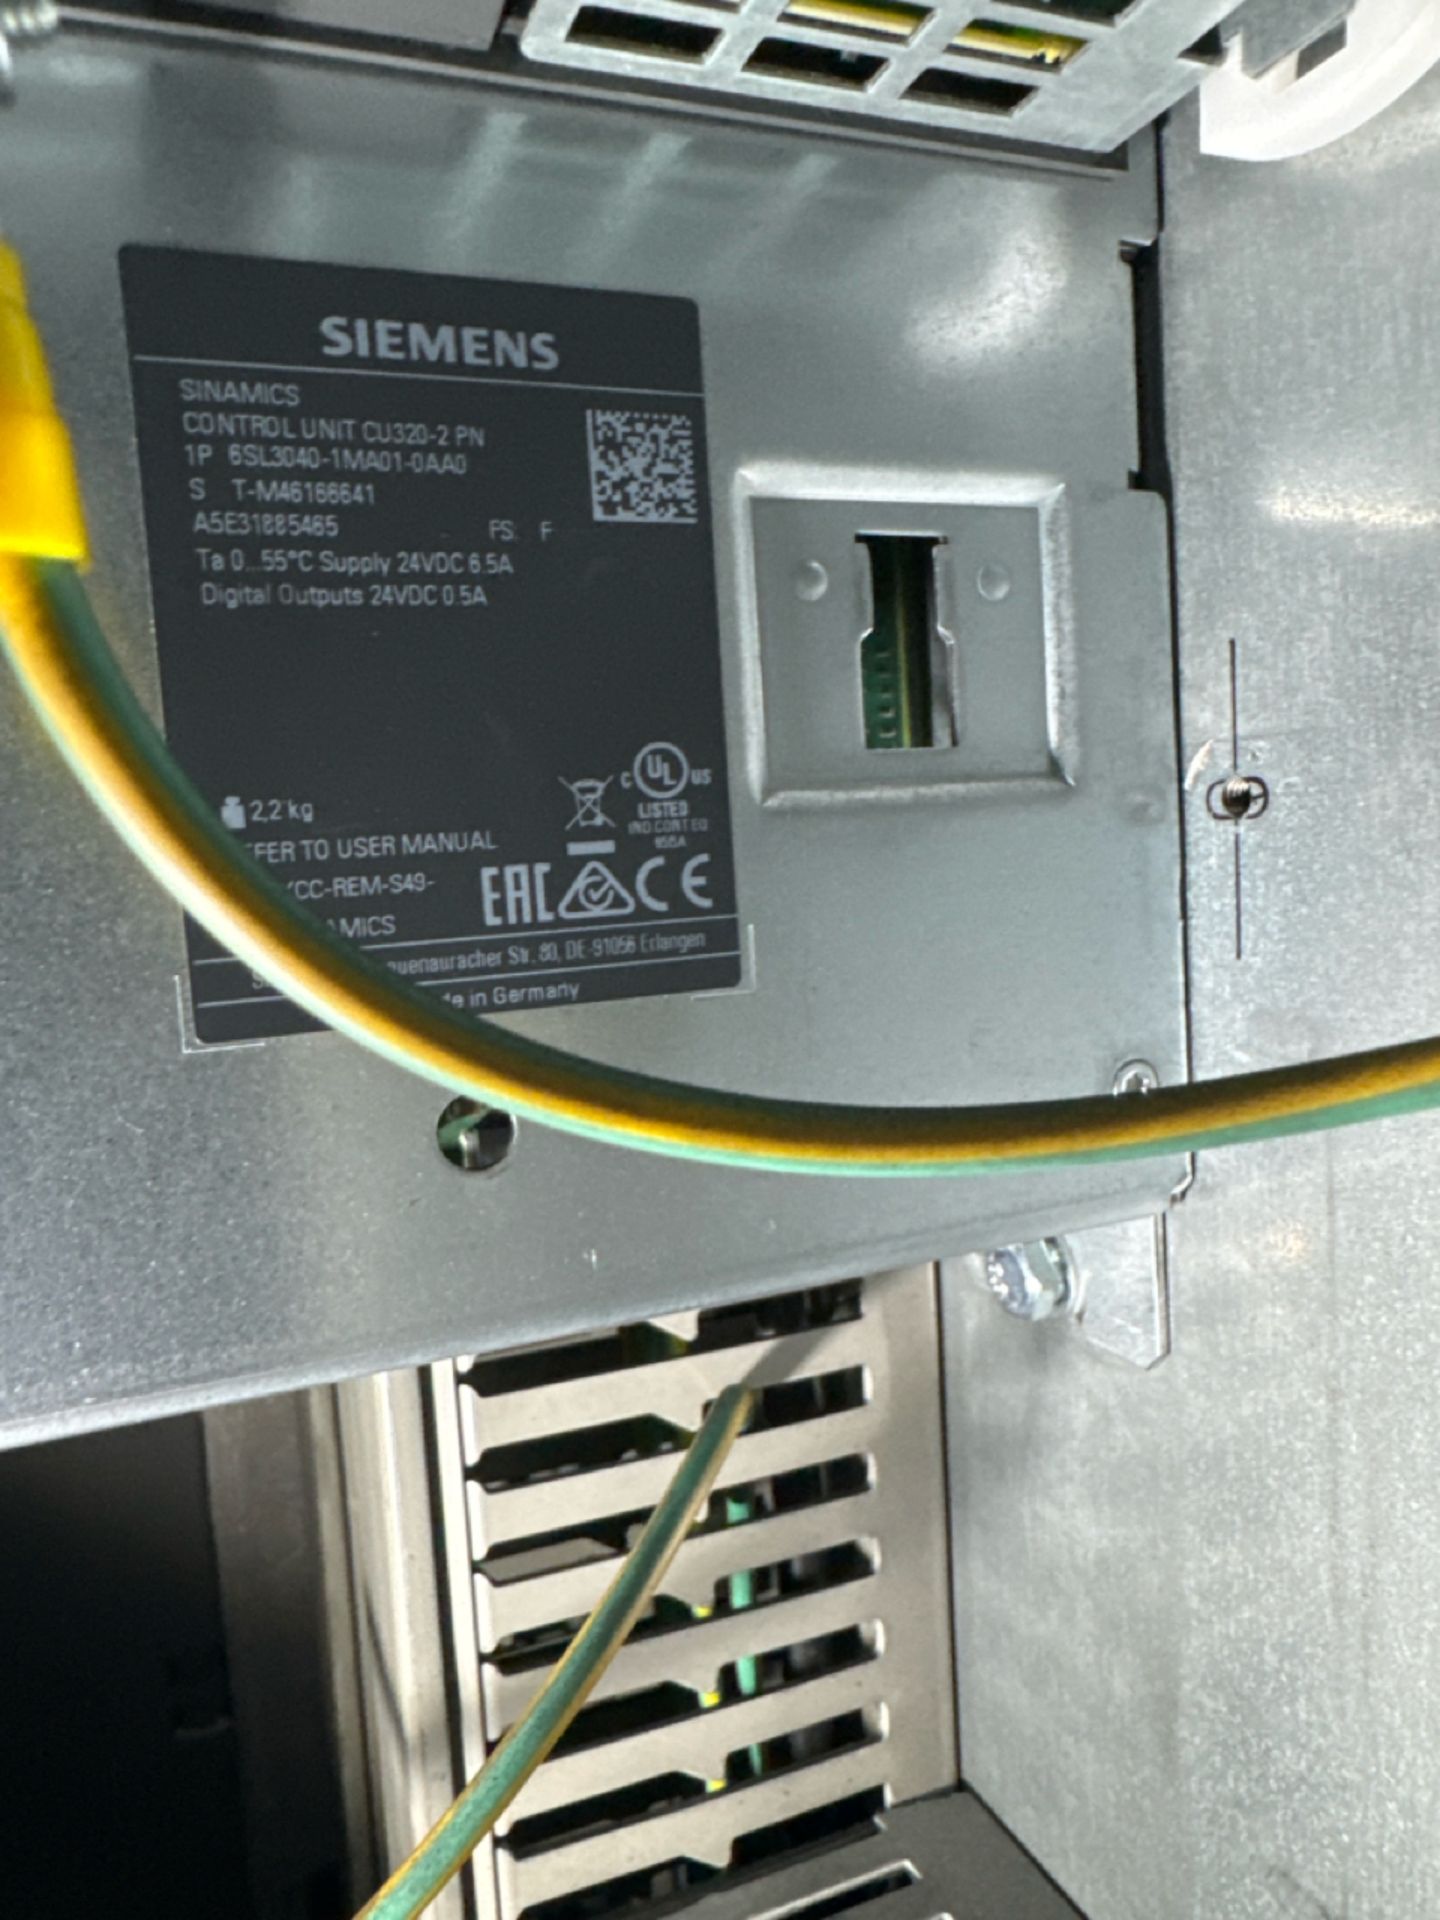 Siemens Sinamics Control Unit CU320-2PN - Image 3 of 3